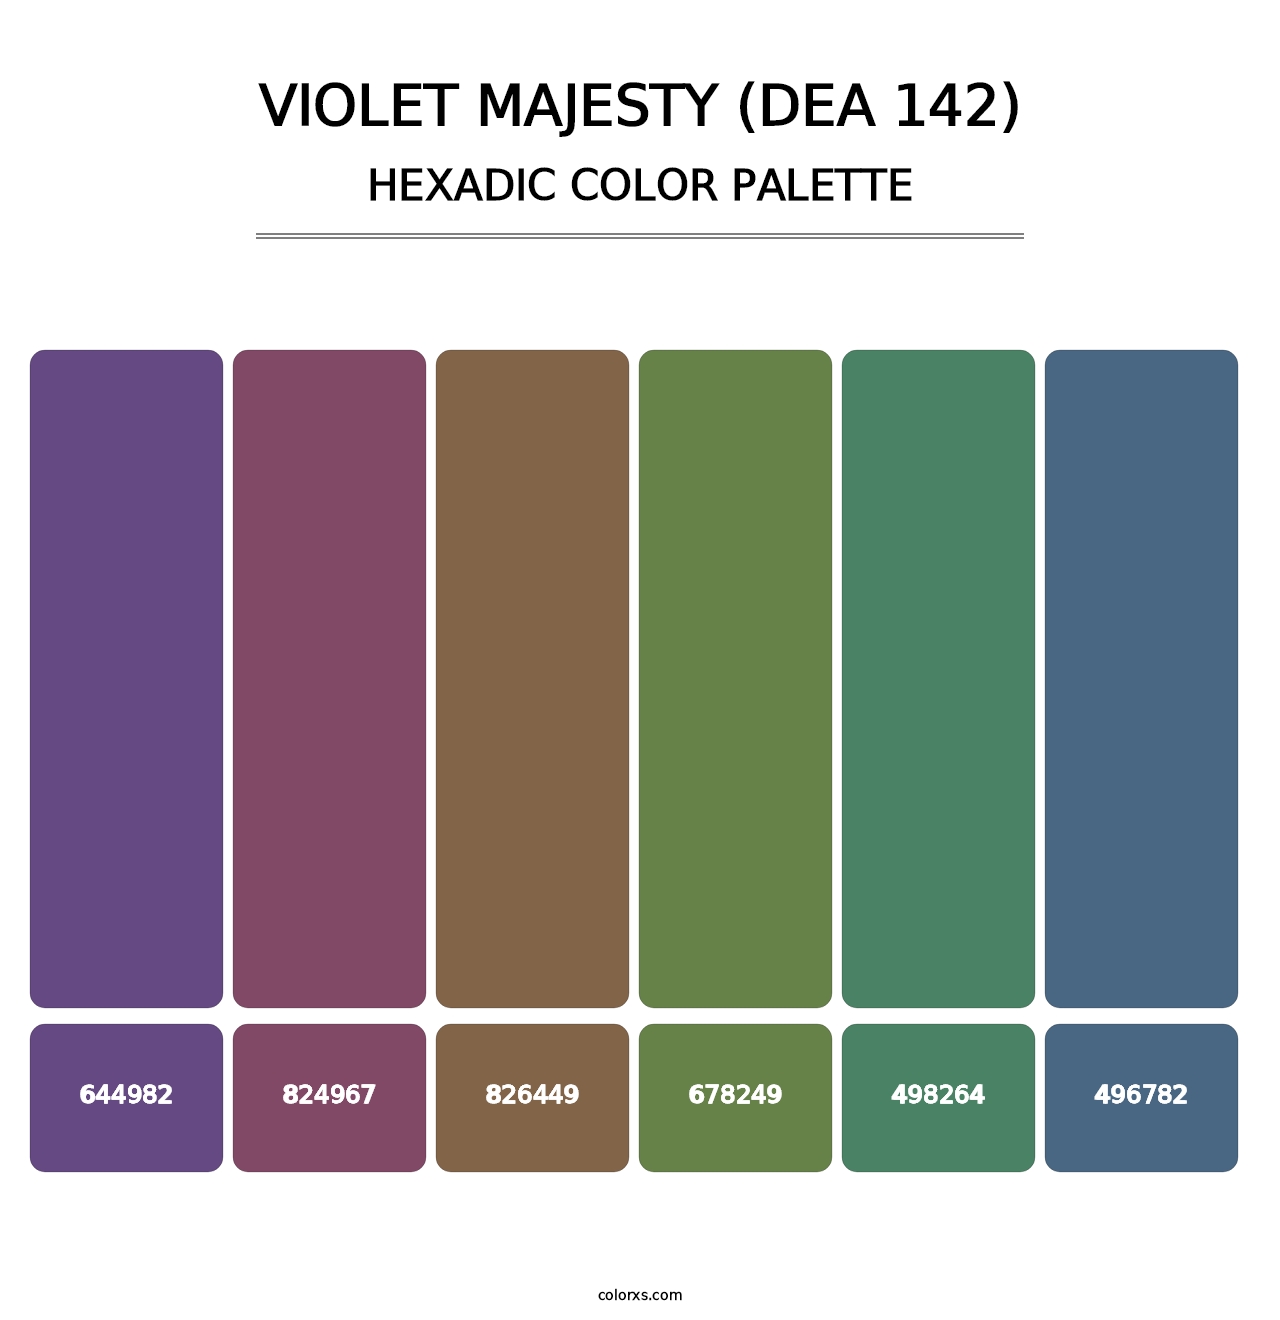 Violet Majesty (DEA 142) - Hexadic Color Palette